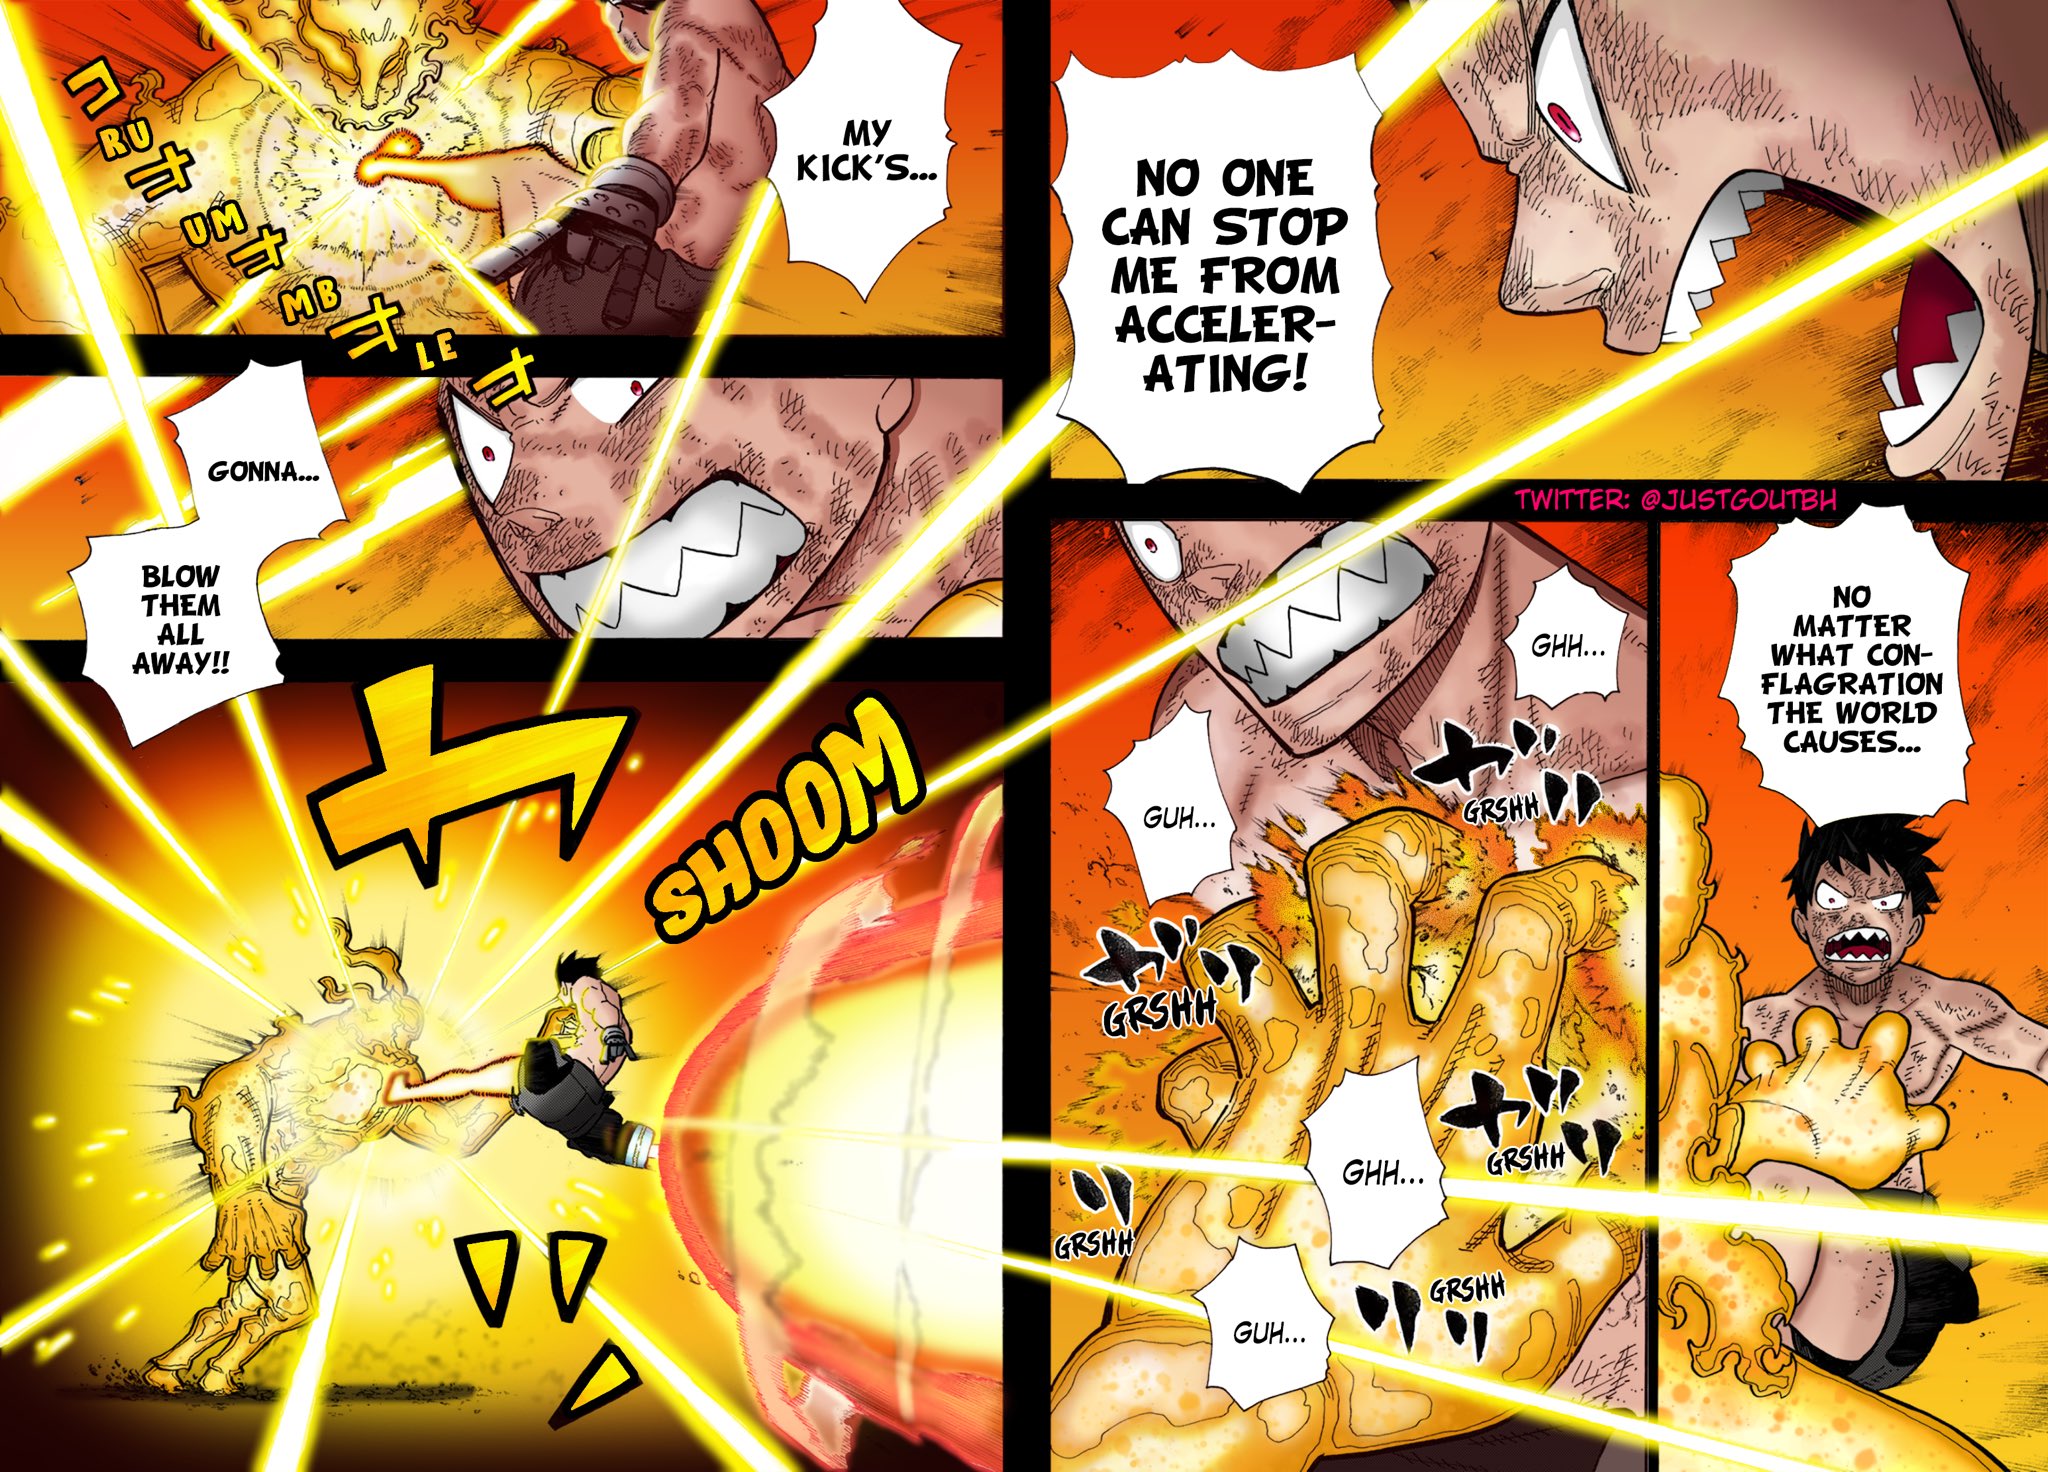 Fire Force - Shinra vs Leonard Burns, Fire Force - Shinra vs Leonard Burns  Un combat enflammé ! 🔥 - 🇯🇵 - 🎮 Discord :  📸  Instagram : animeworld_fr, By Anime World